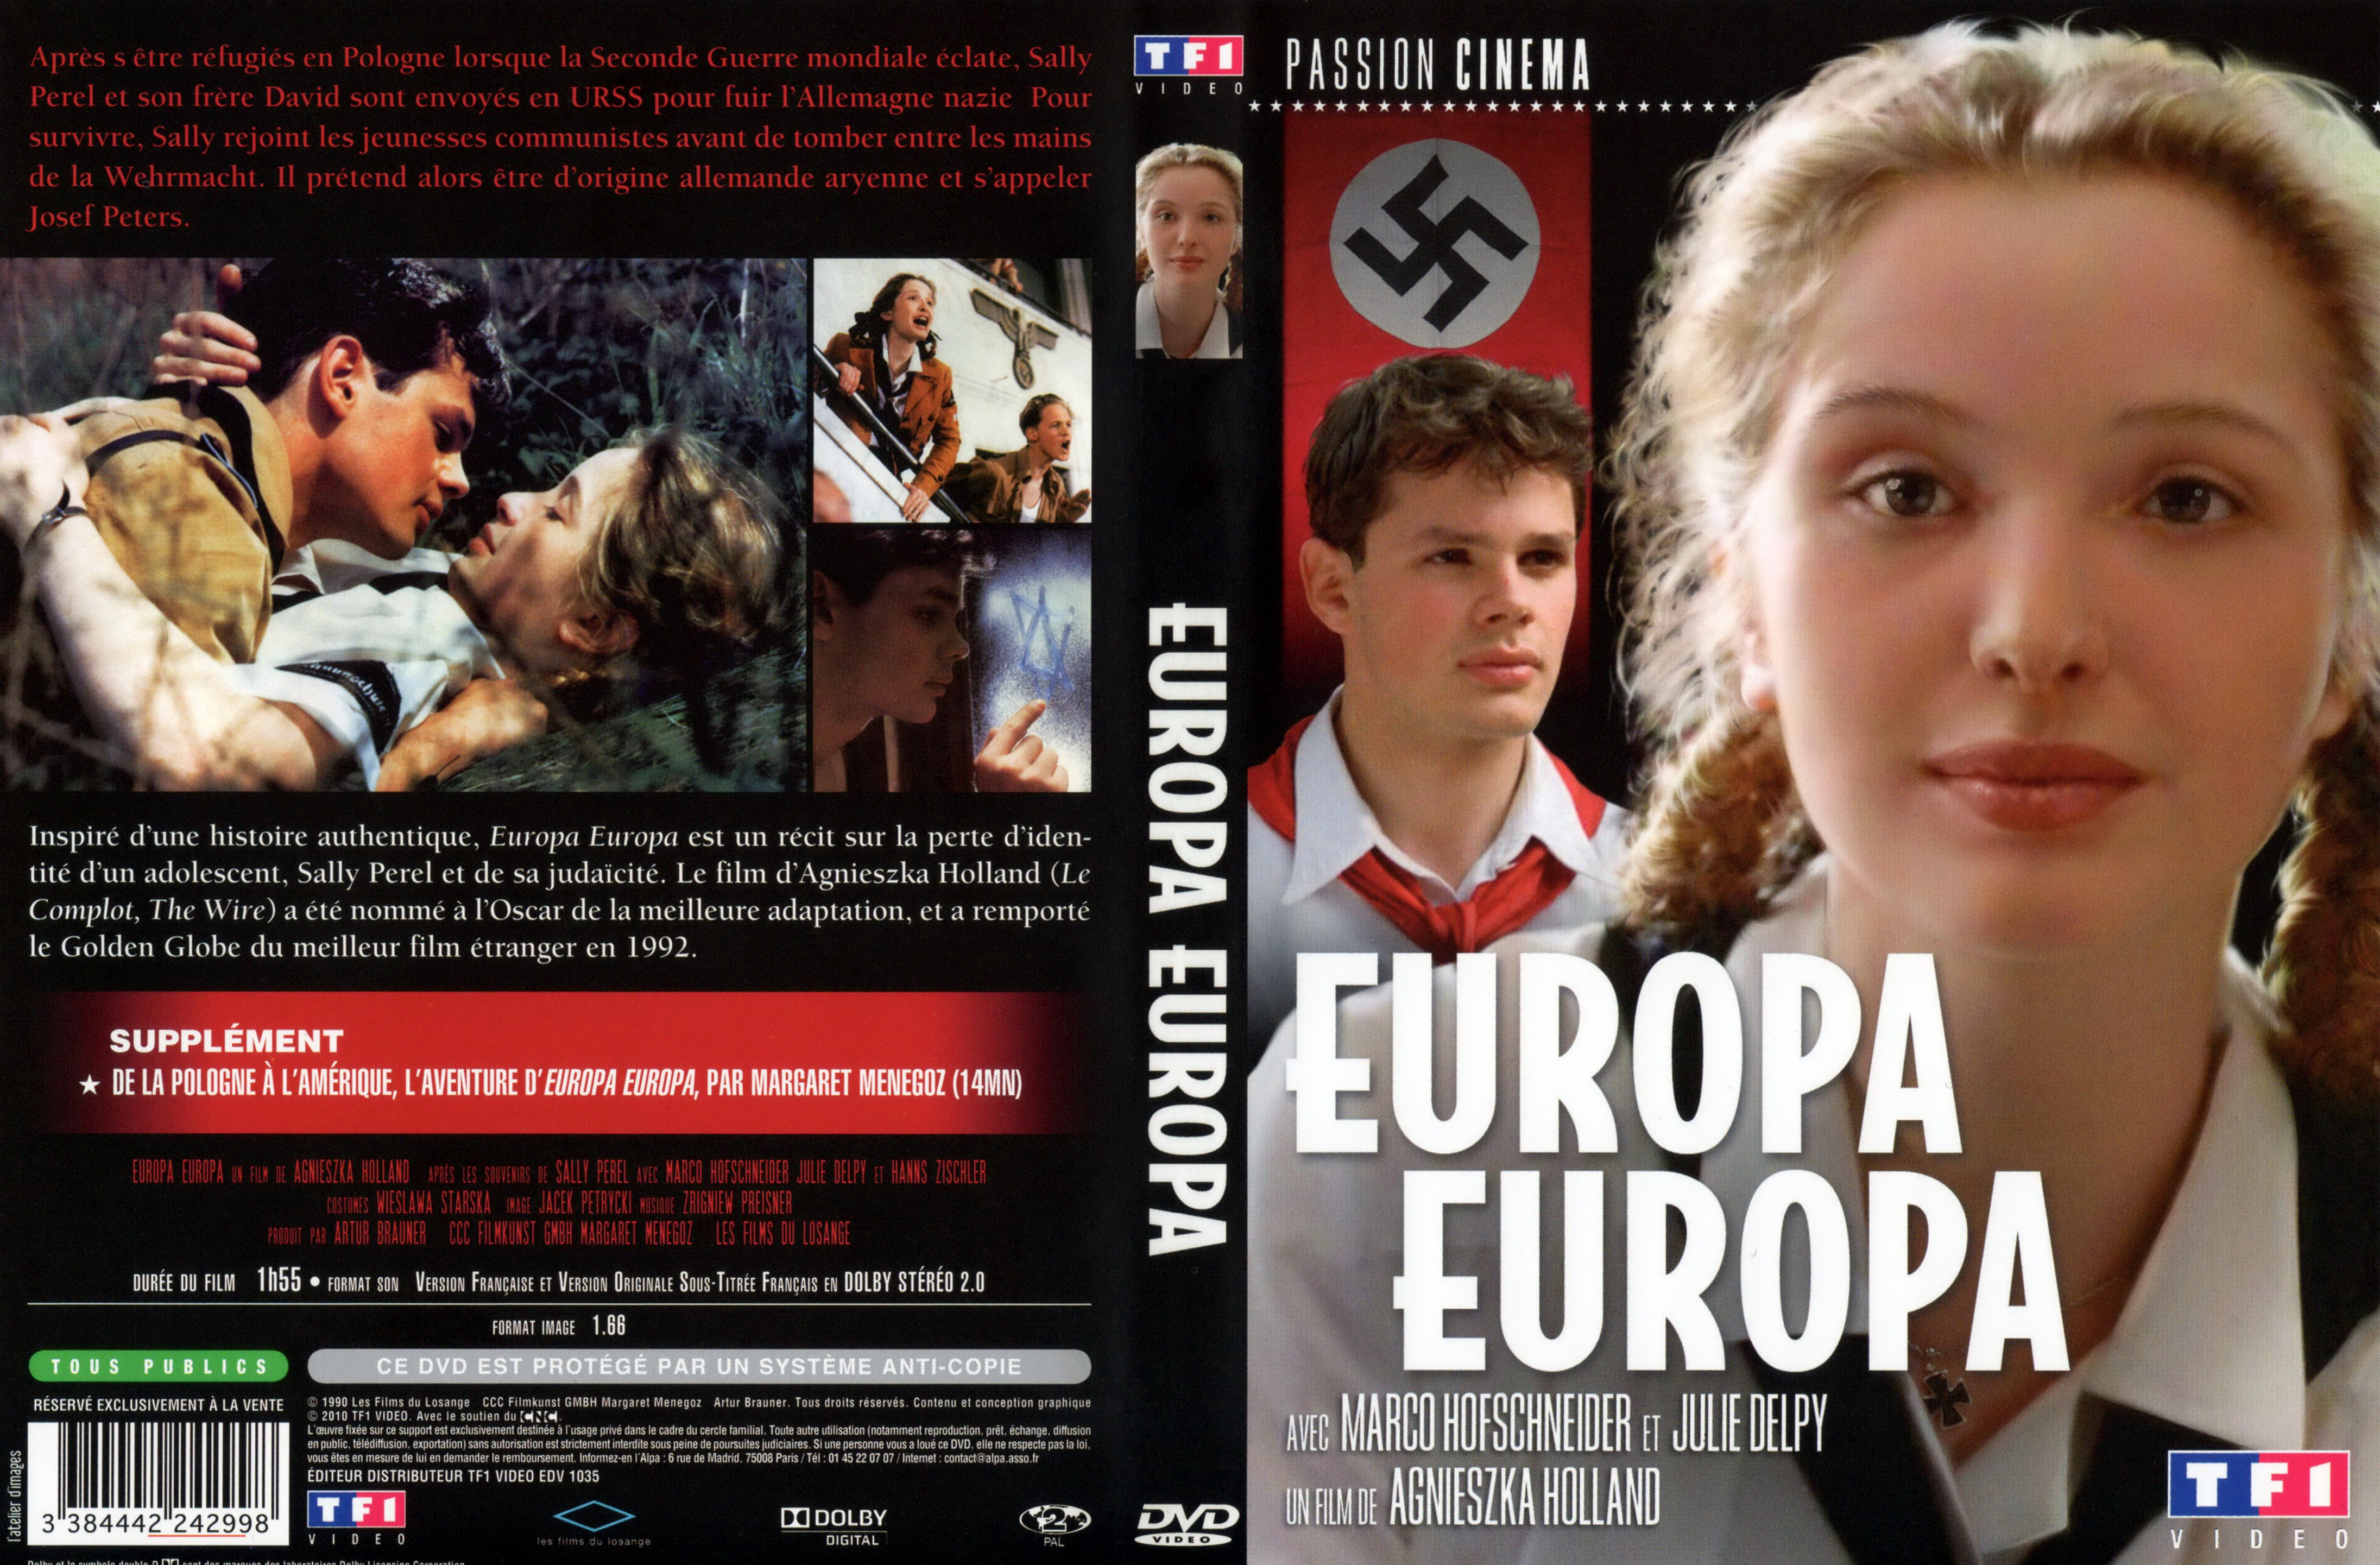 Jaquette DVD Europa Europa